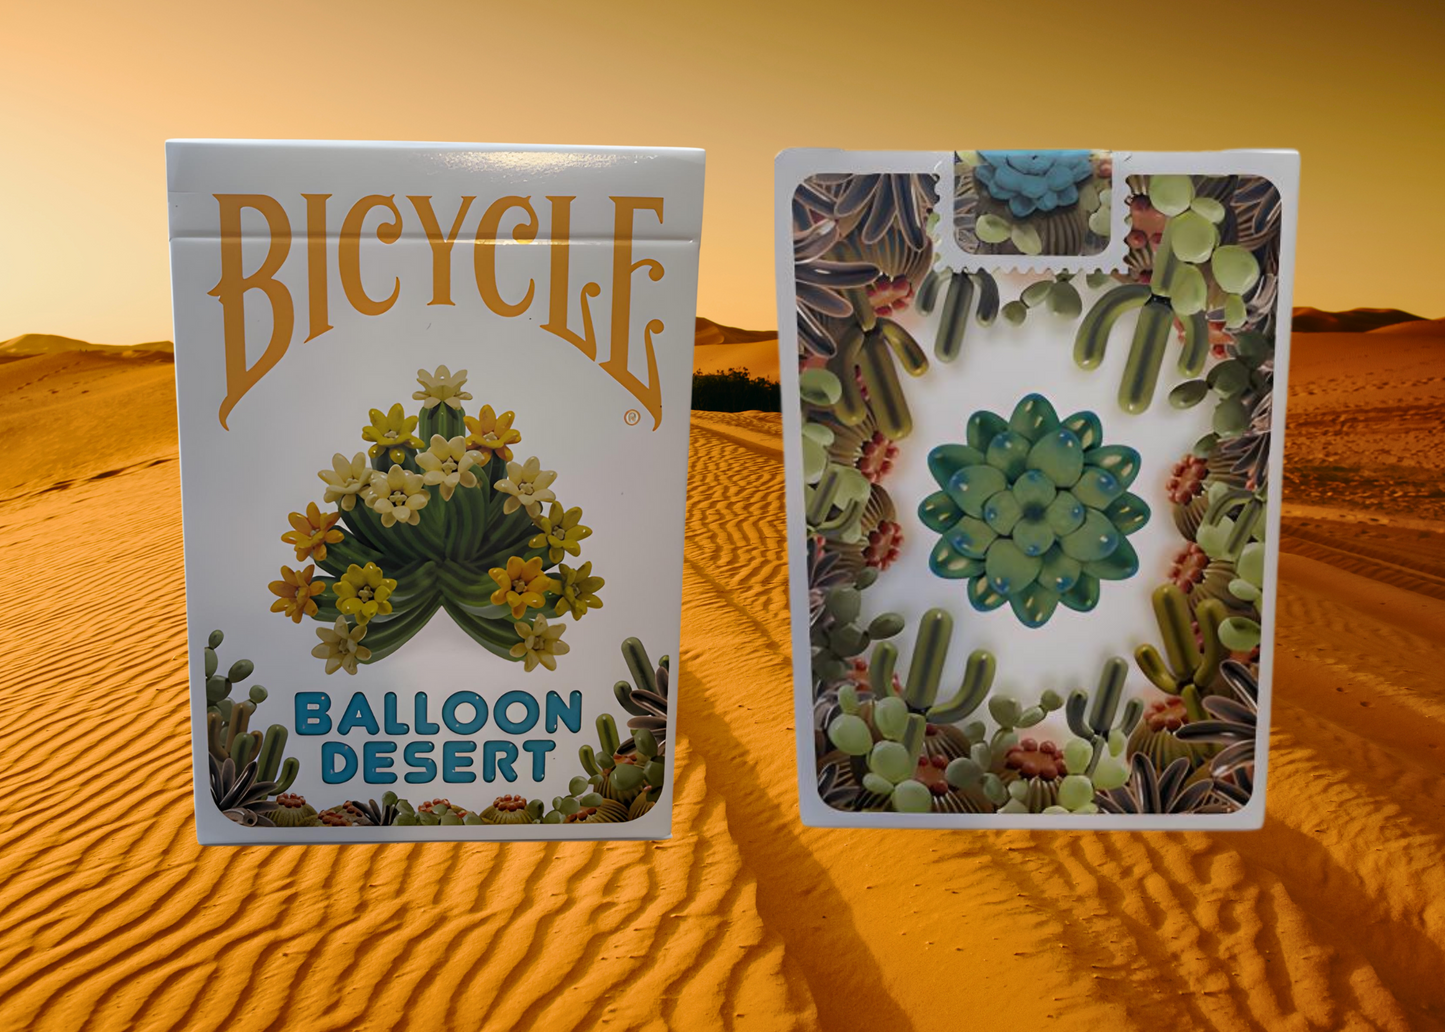 Balloon Desert Bicycle Playing Cards